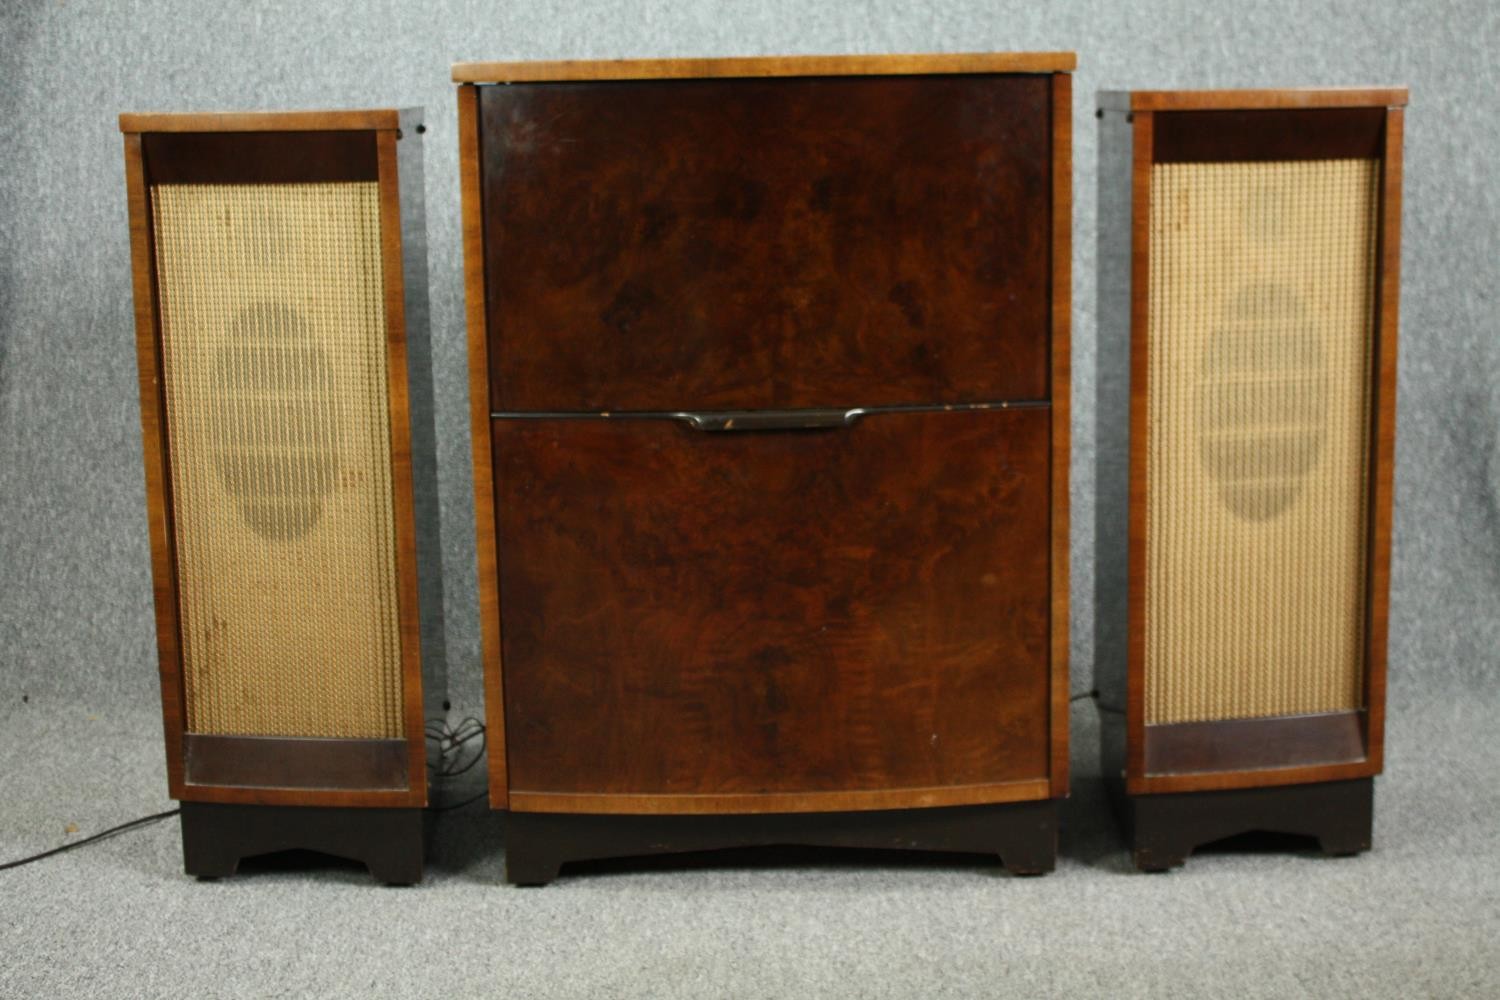 HMV radiogram, Garrard RC.121, mid century burr walnut cased with matching speakers. H.86 W.61 D.